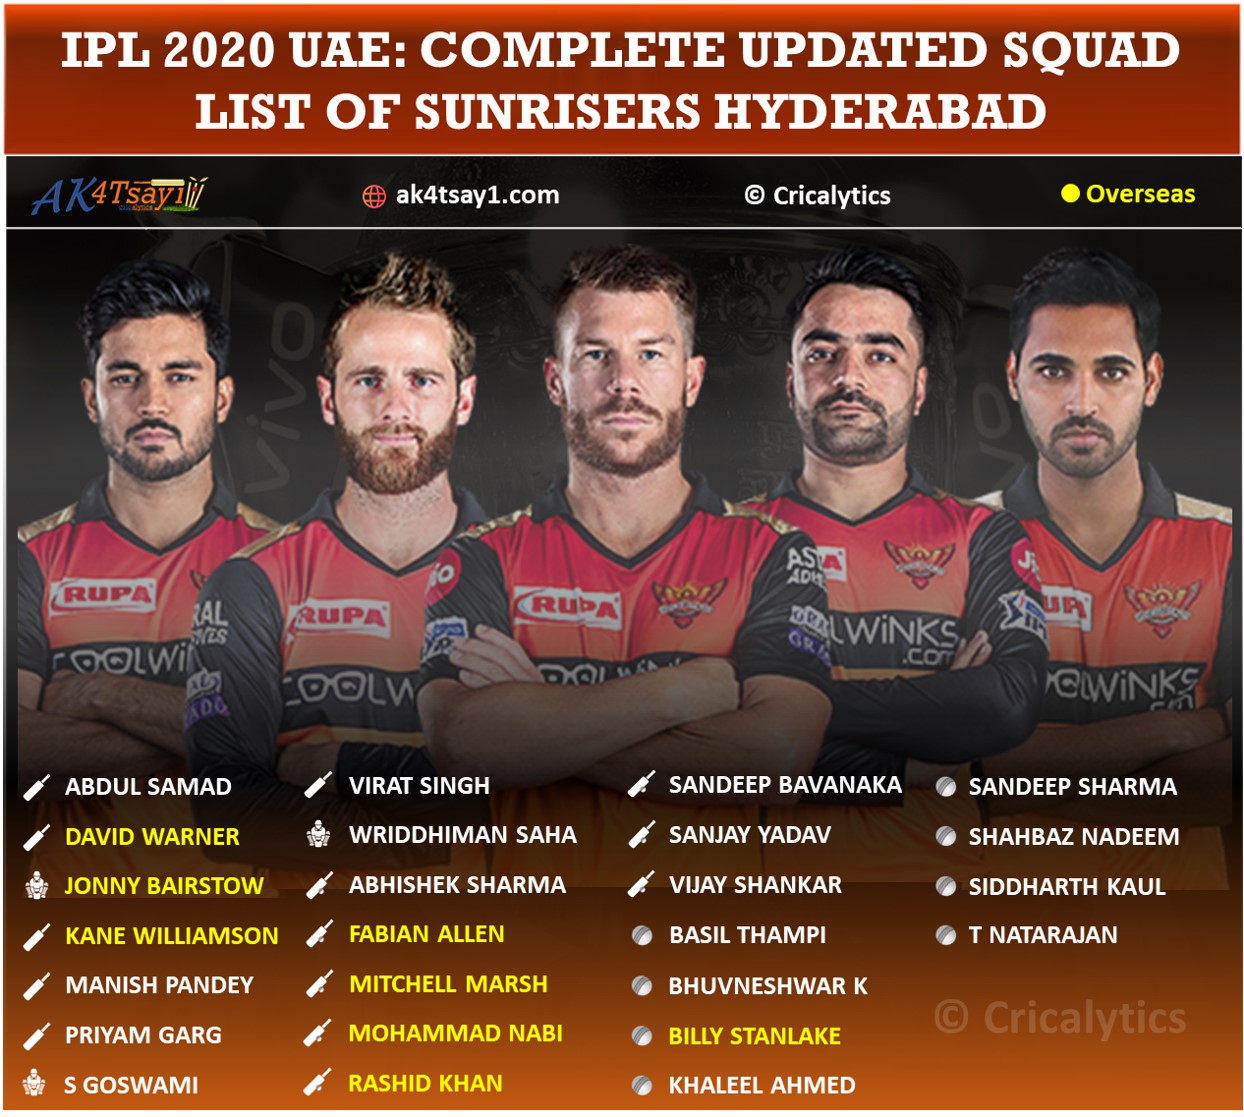 IPL 2020 UAE Sunrisers Hyderabad, SRH updated squad